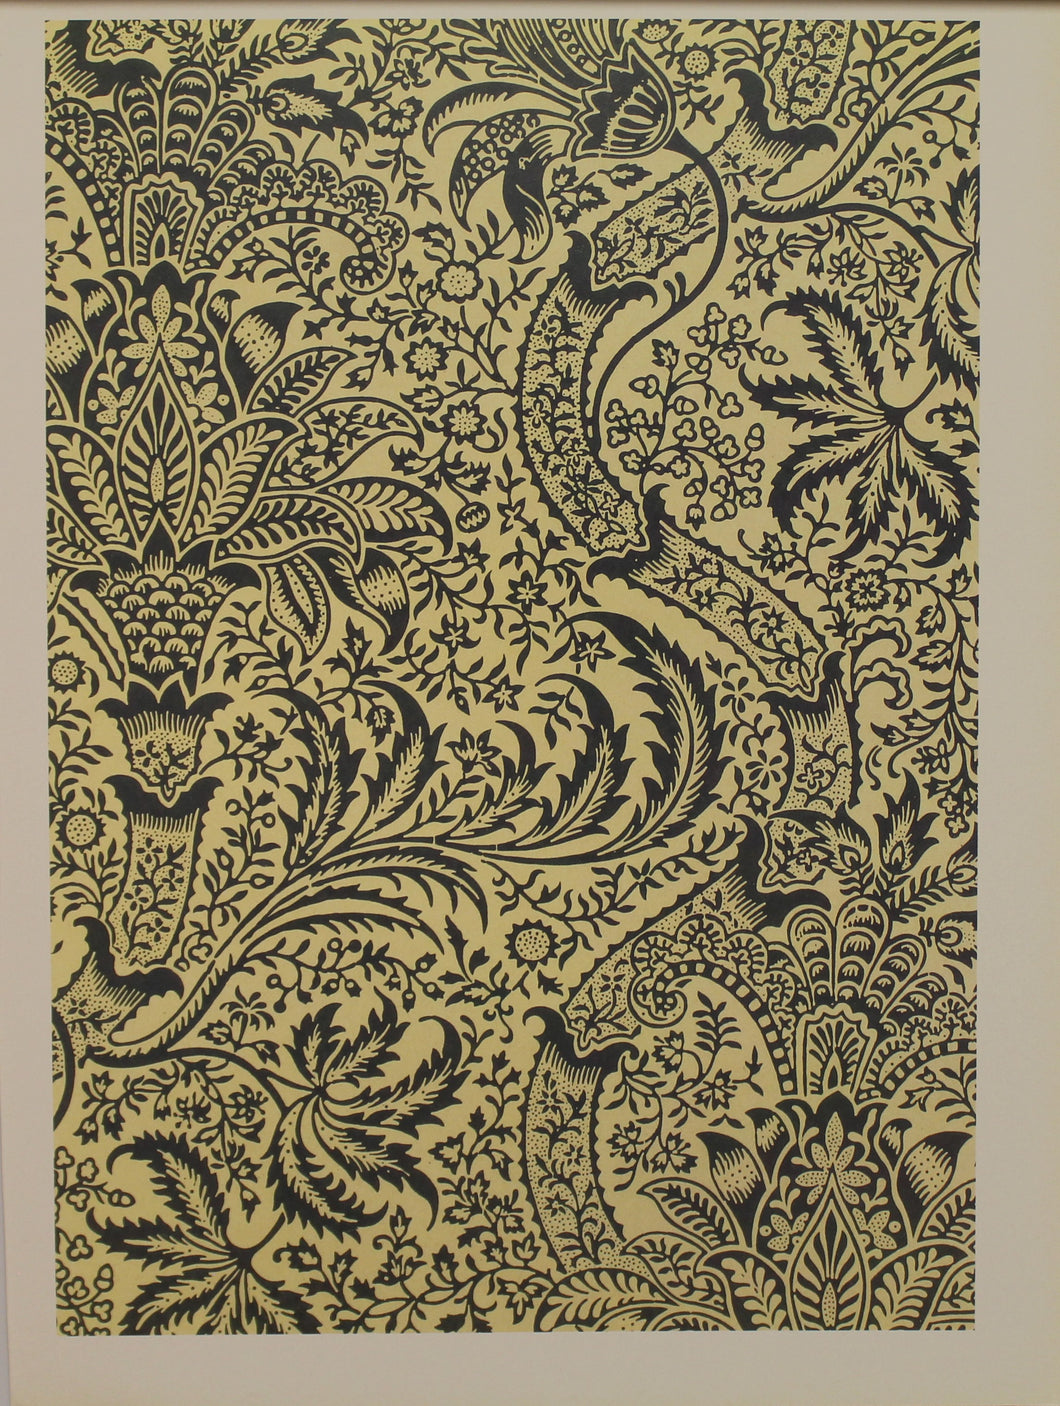 Decorator, Morris William, Textile Design, Indian, Art Nouveau, Plate 8, c1871